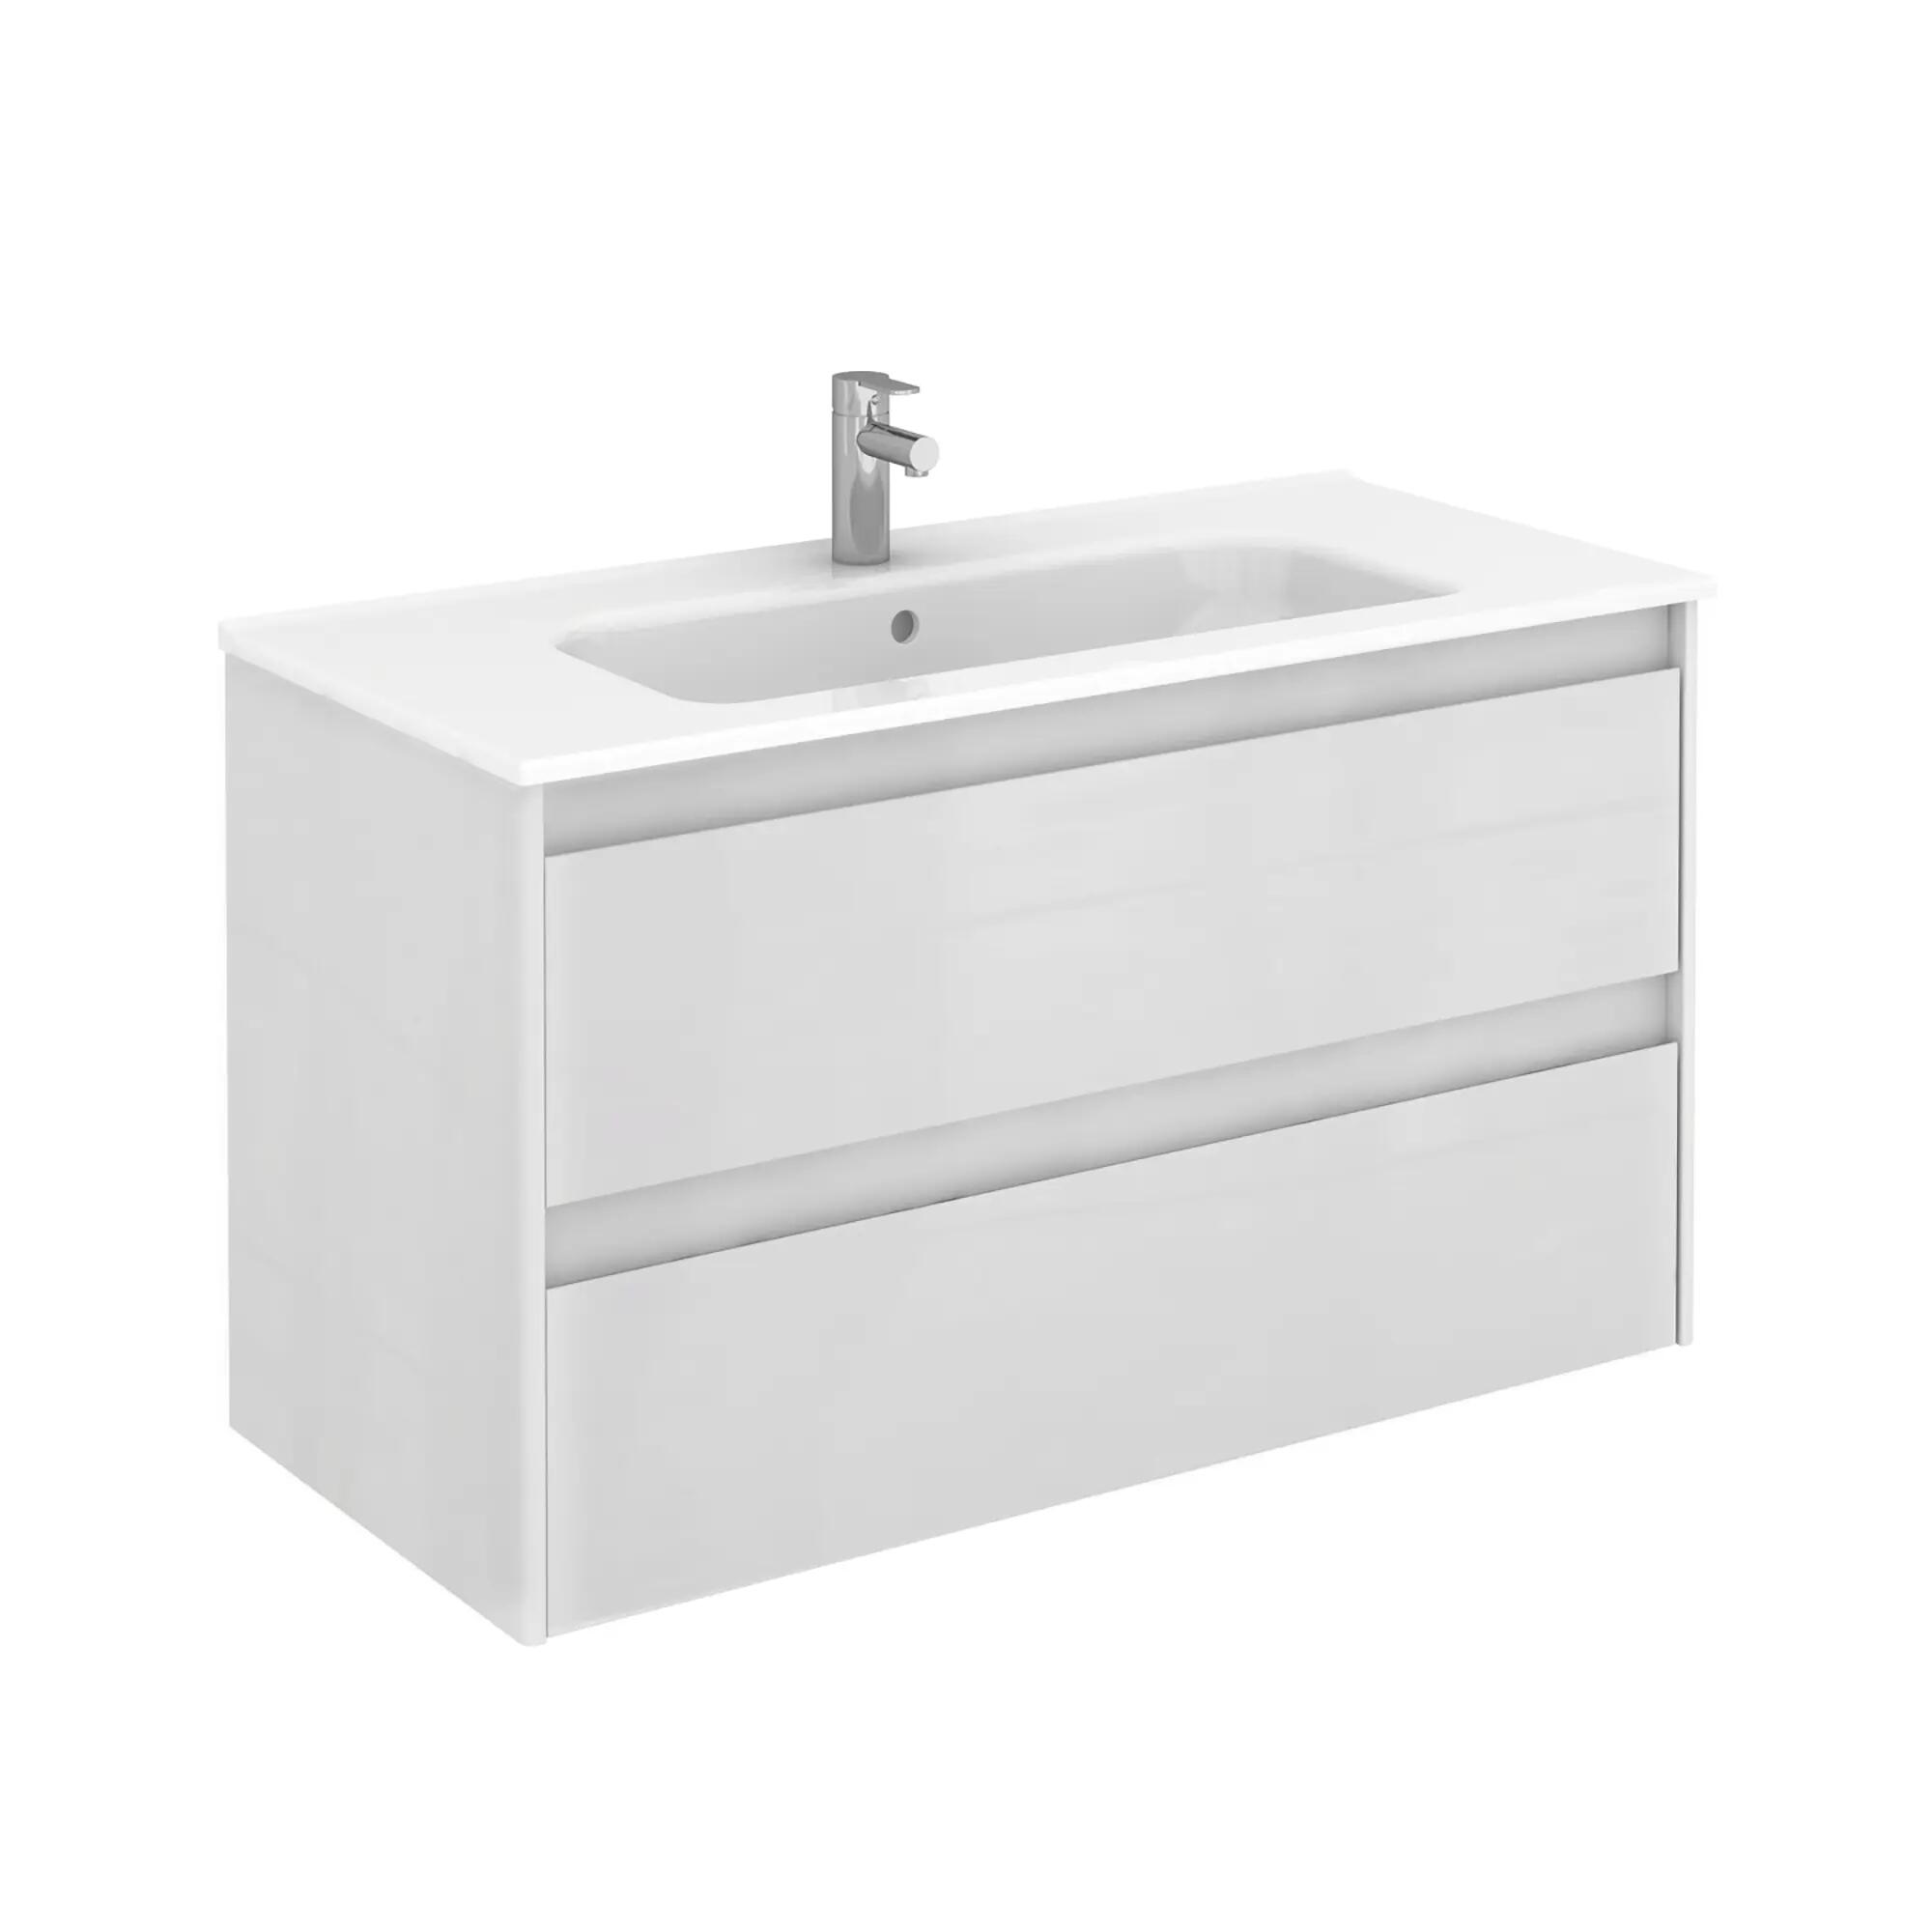 Mueble de baño con lavabo alfa blanco mate 100x45 cm